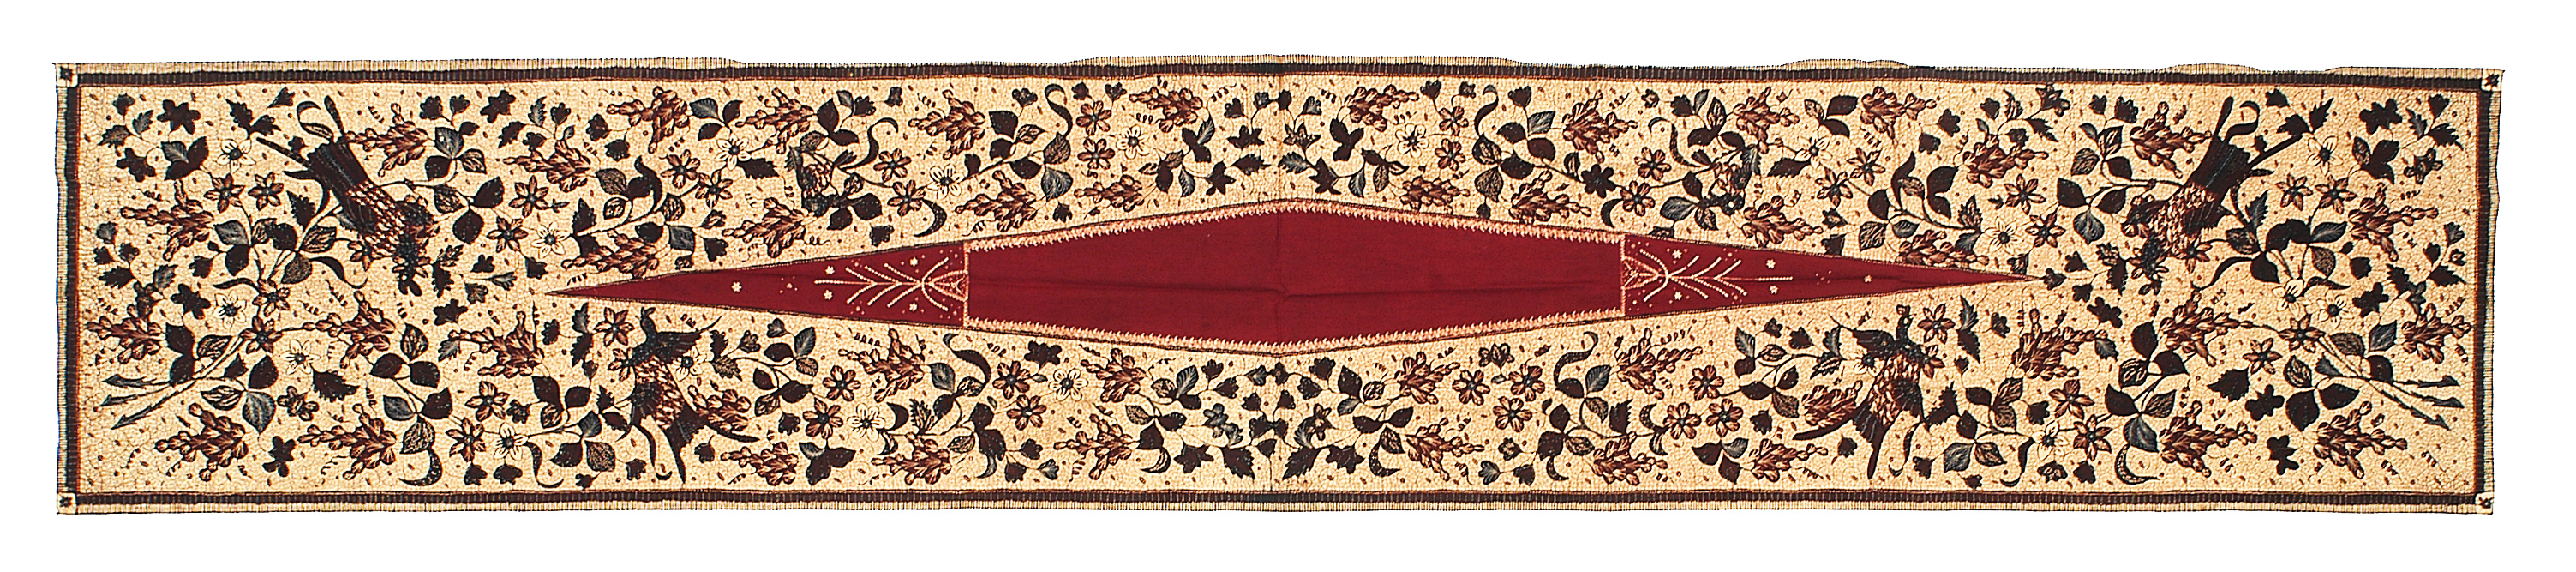 Batik kemben, central Java, Indonesia, 20th century. 0.51 x 2.81 m (1' 8" x 9' 3"). Textile Museum, Jakarta, Gift of Rudolf Smend